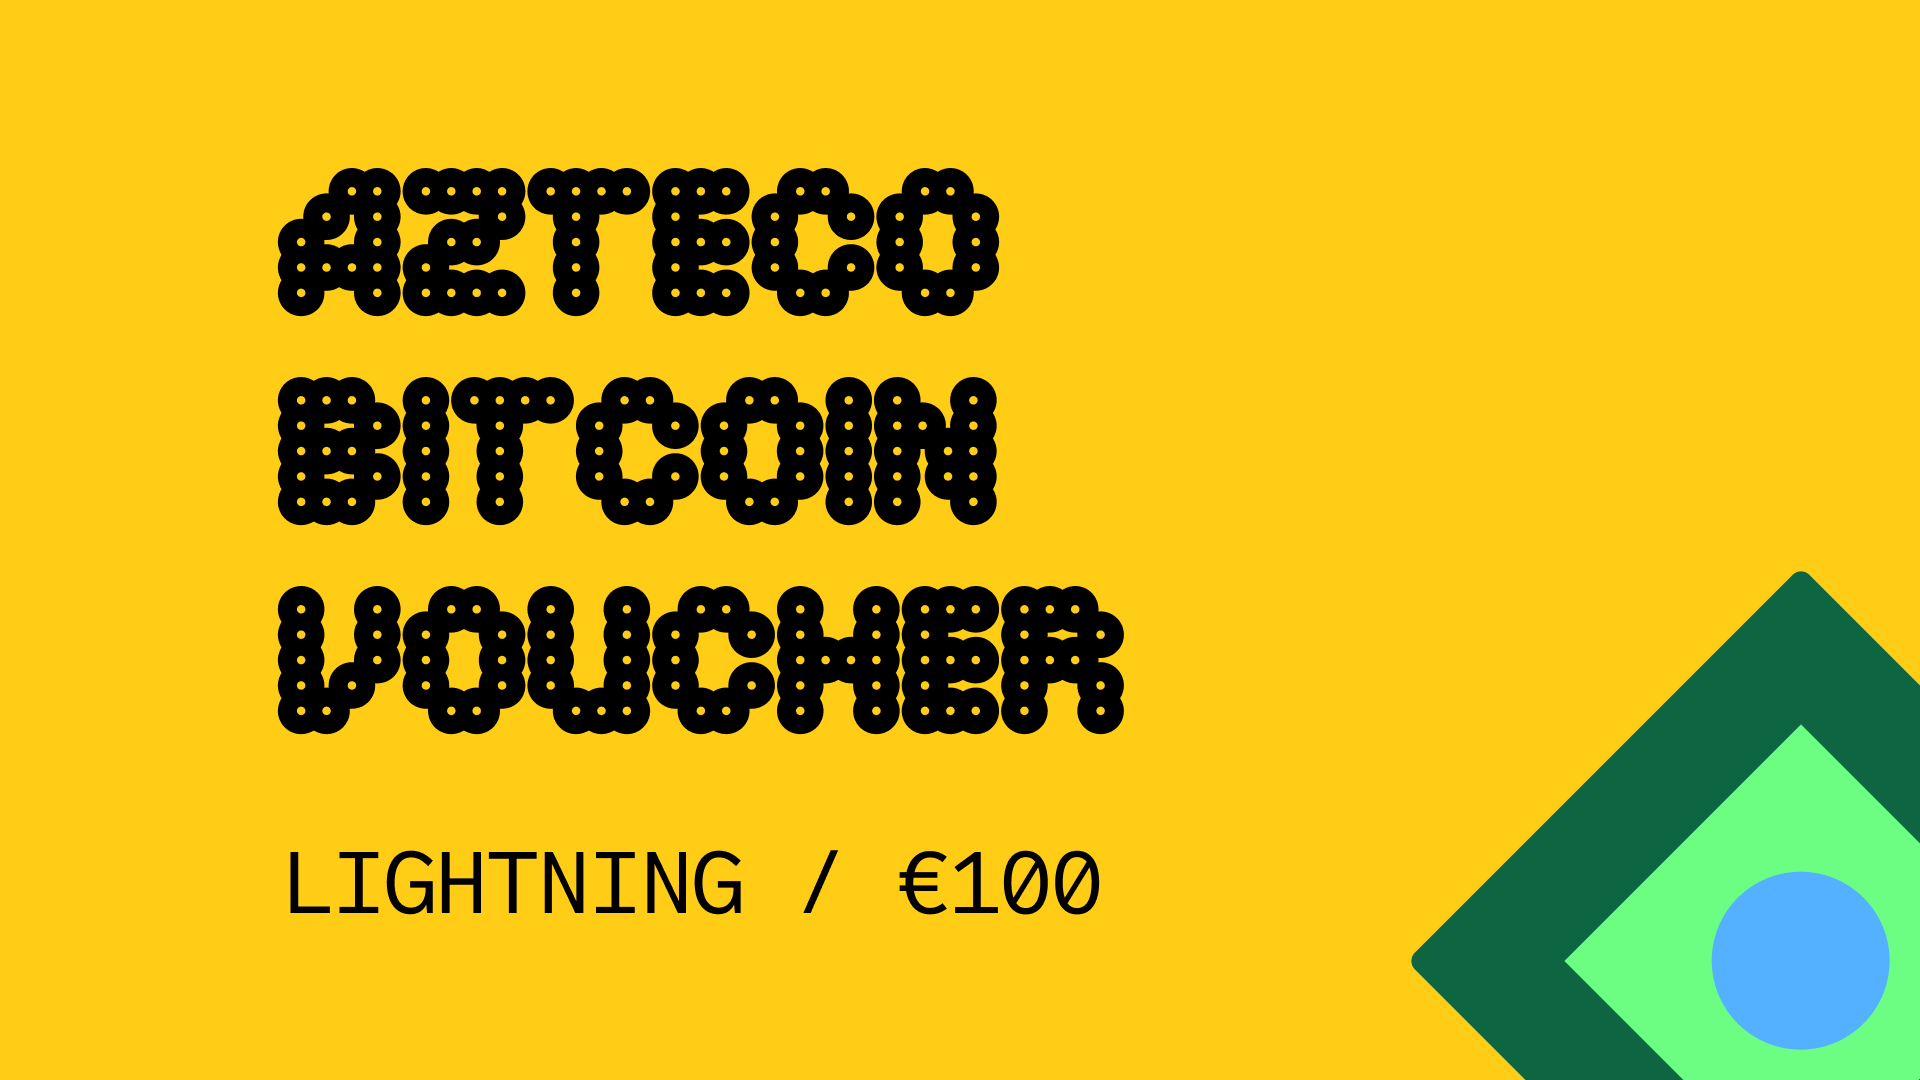 Azteco Bitcoin Lighting €100 Voucher, $112.98